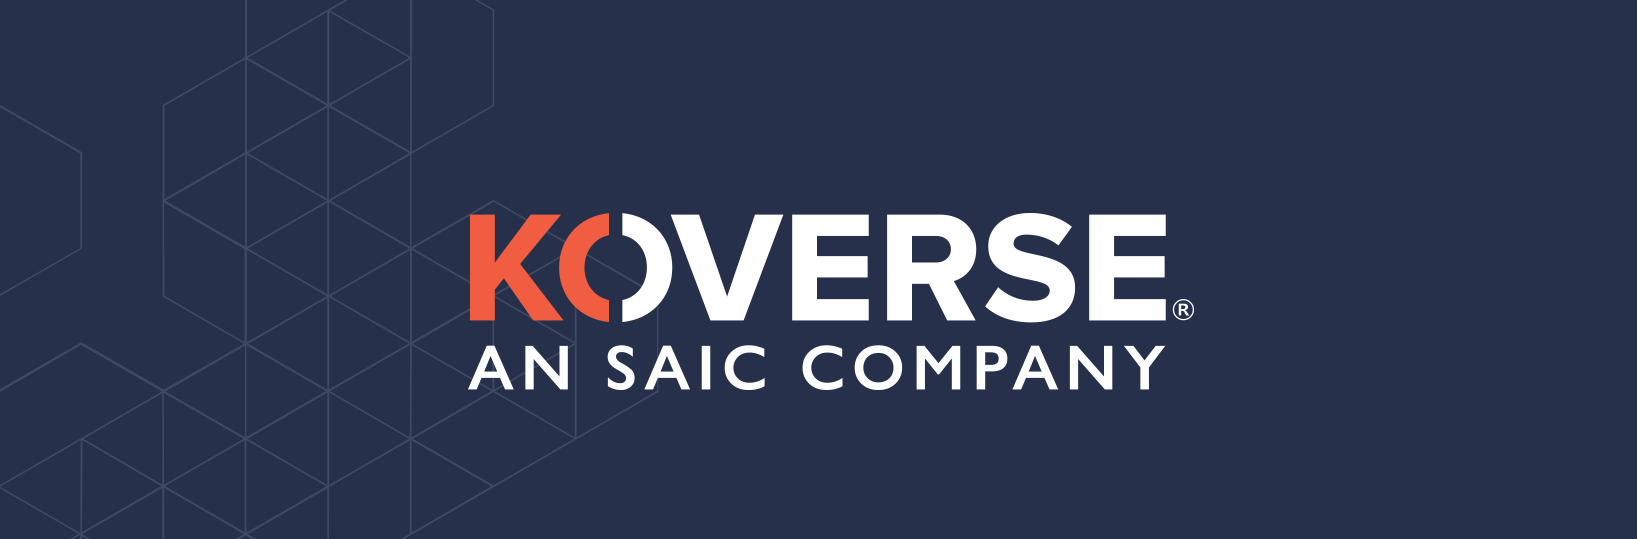 Koverse an SAIC Company - Press Release